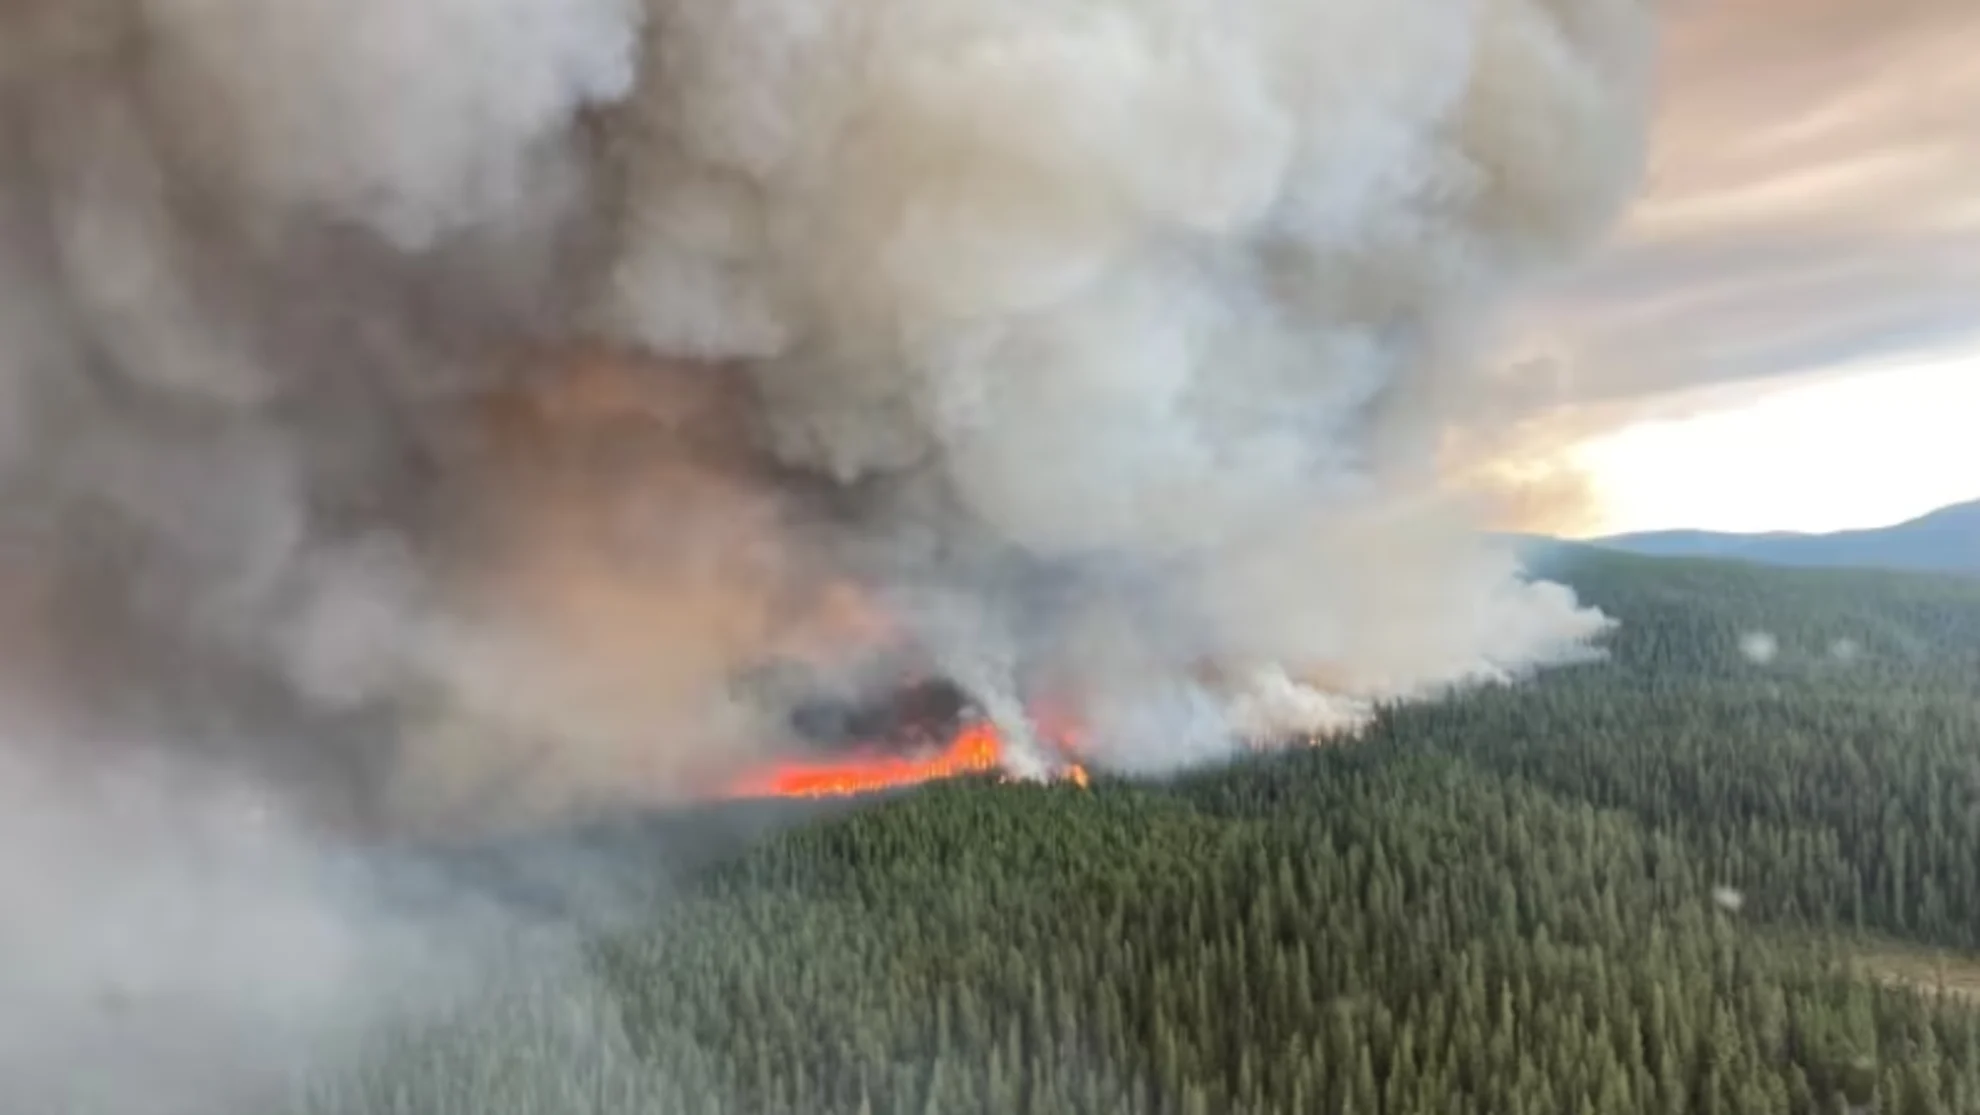 Rains bring some brief relief in B.C.'s record wildfire season